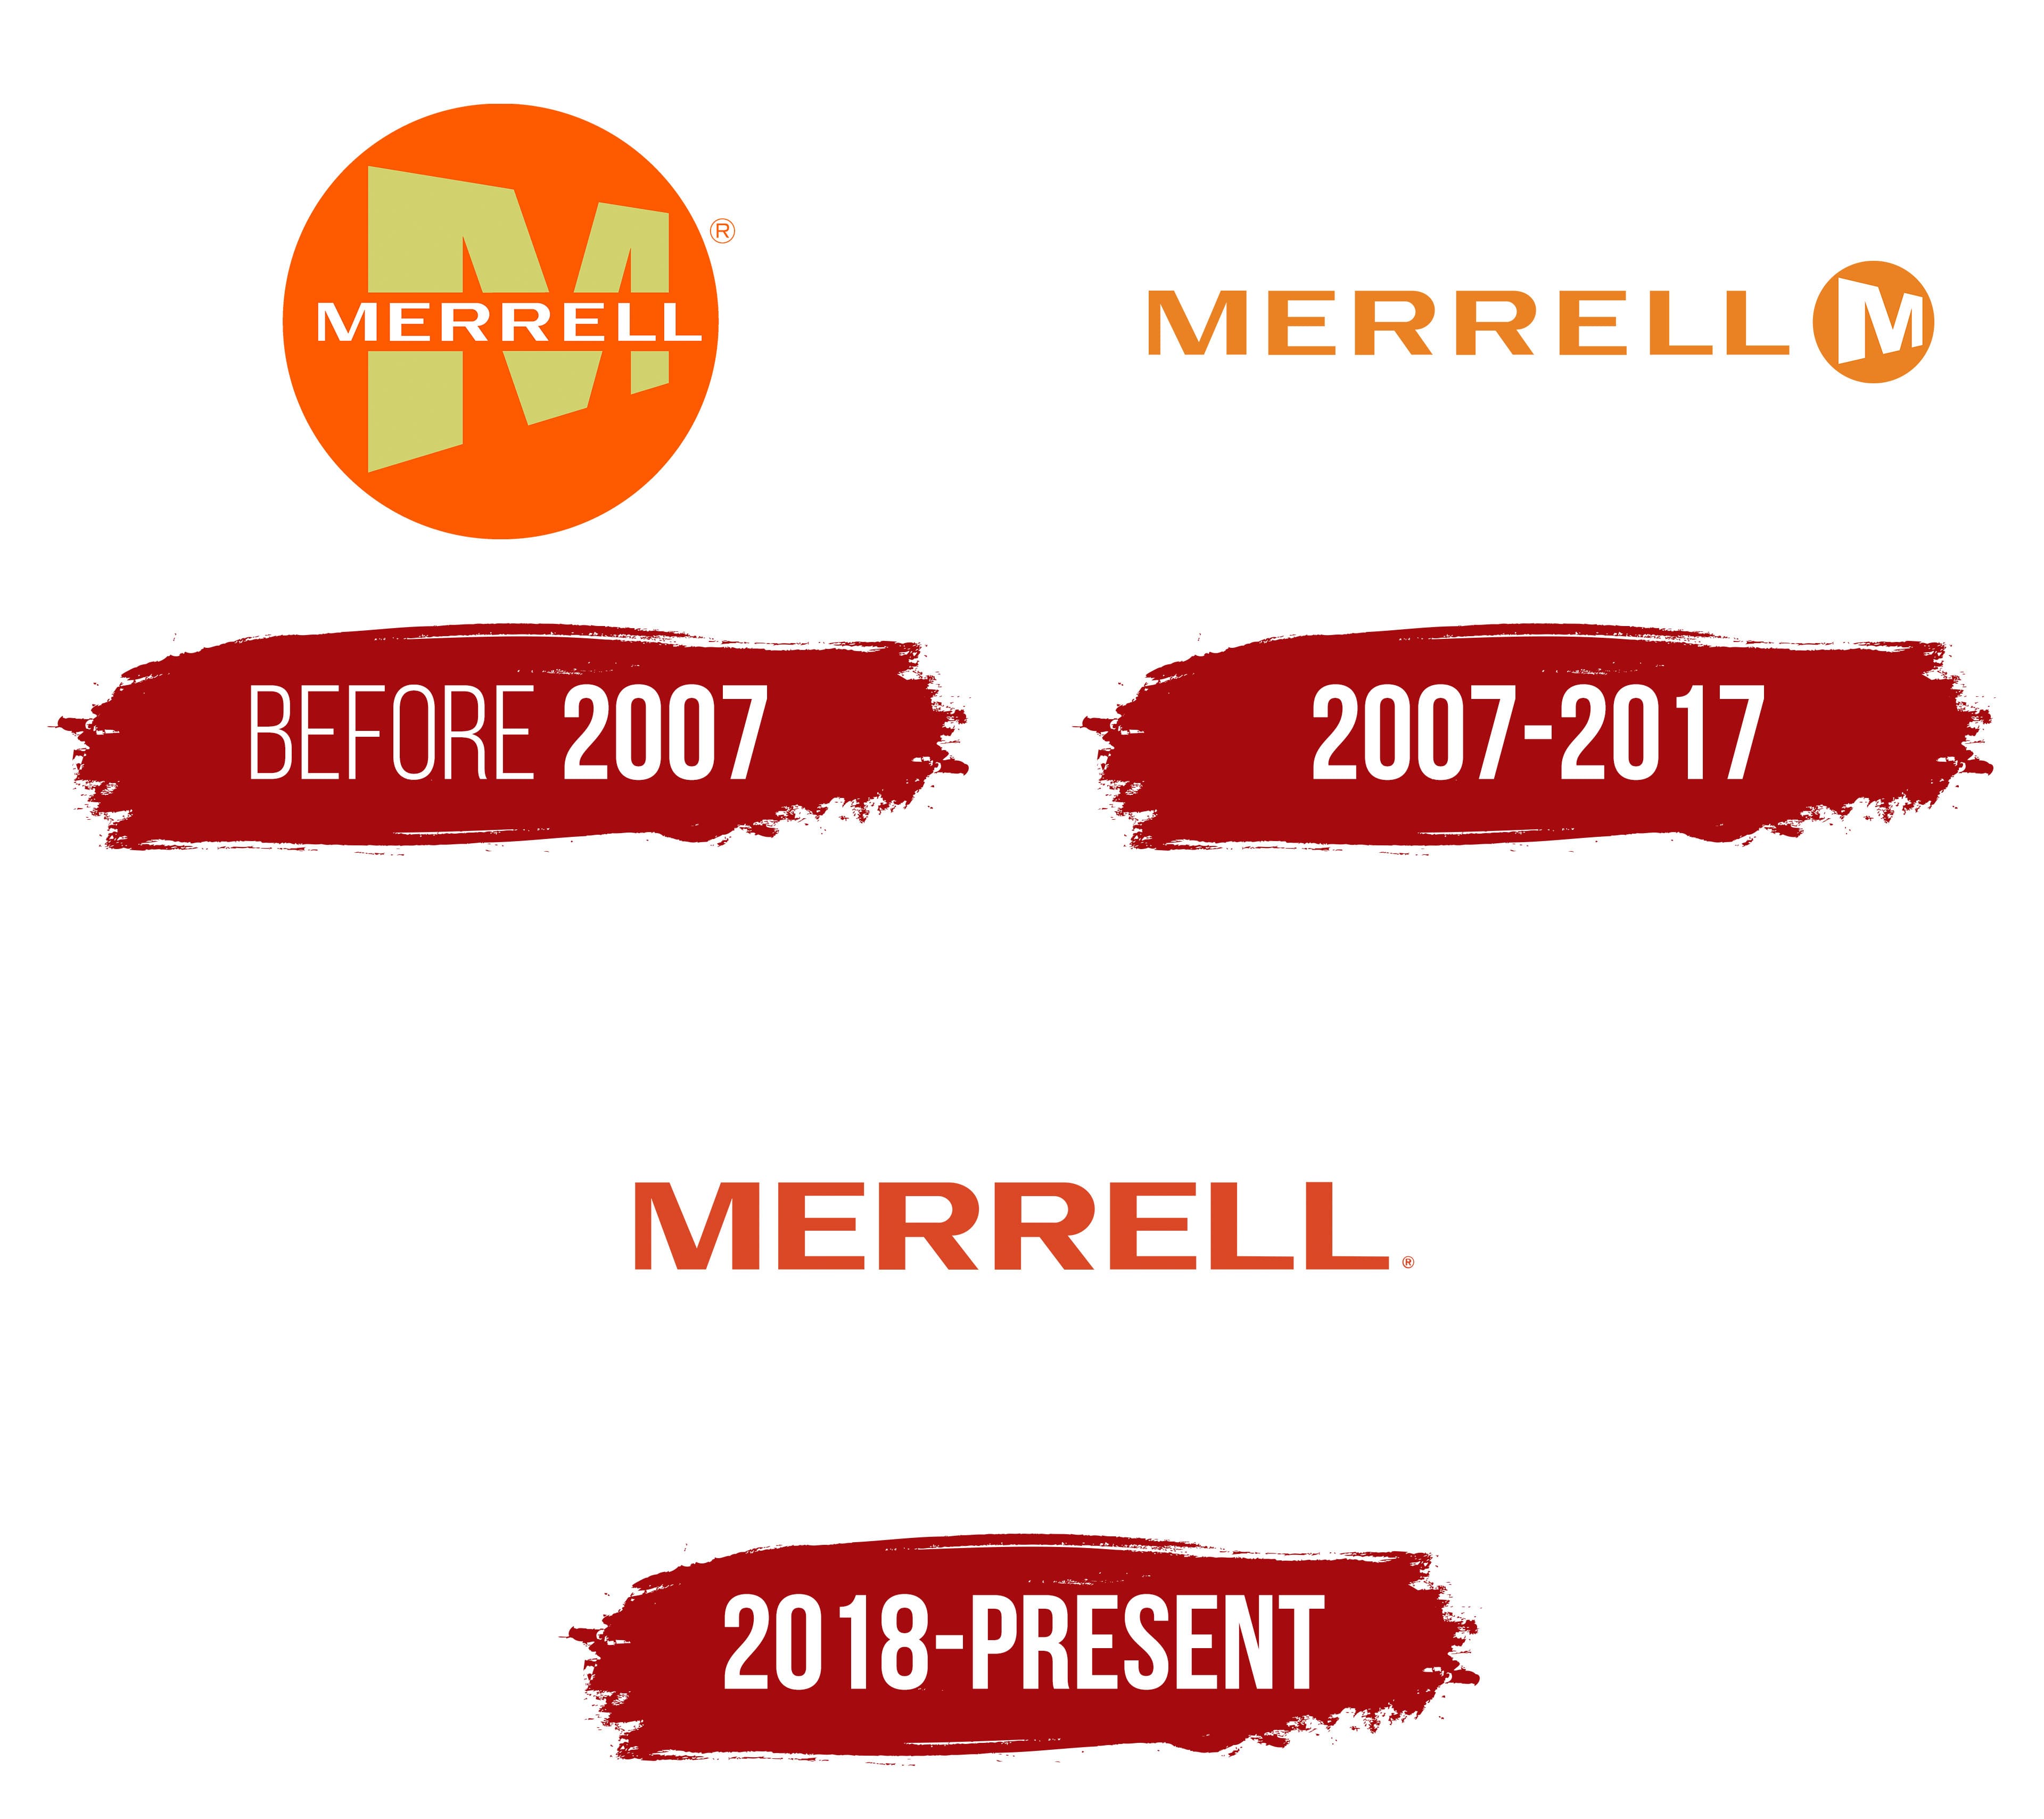 Frem Junction De er Merrell Logo, symbol, meaning, history, PNG, brand